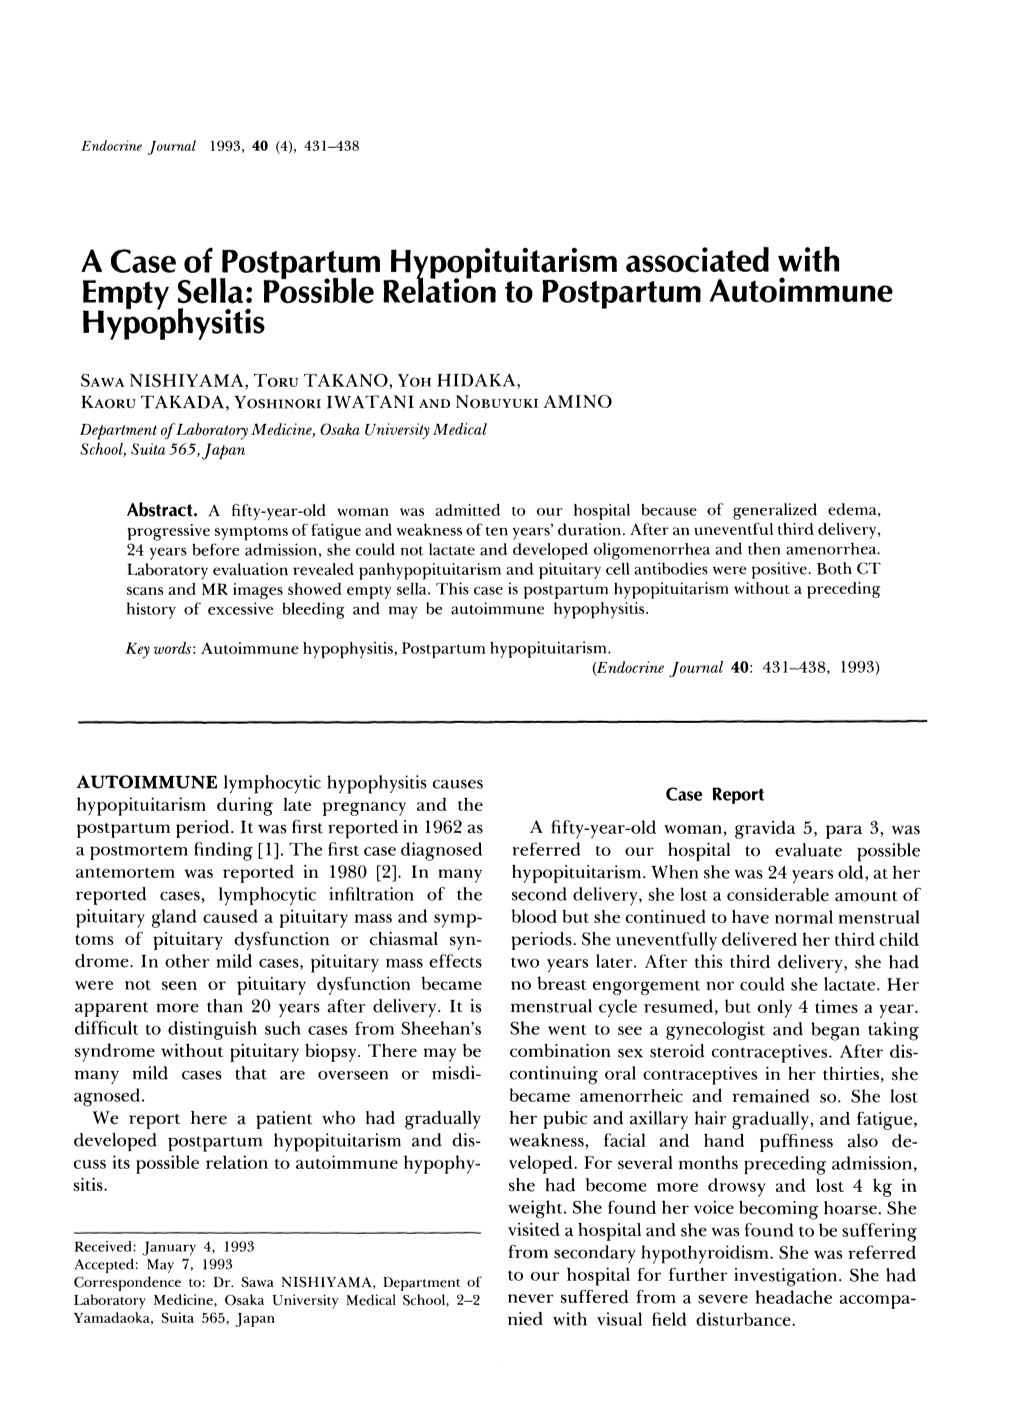 A Case of Postpartum Empty Sella: Possible Hypophysitis